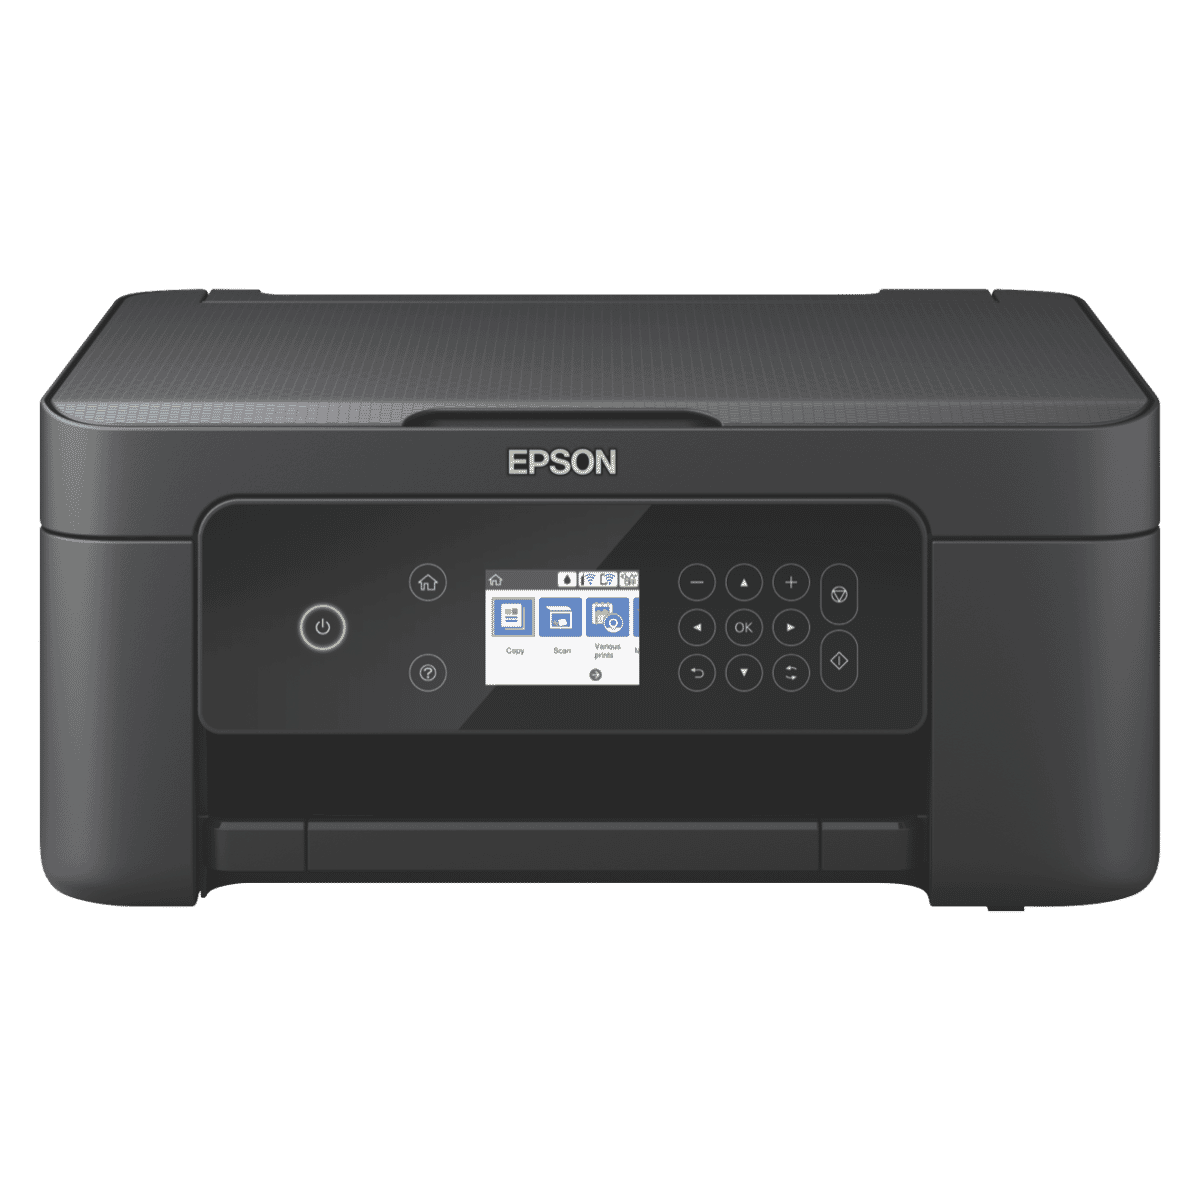 Epson XP-4100 Expression Home Printer XP-4100 The Good